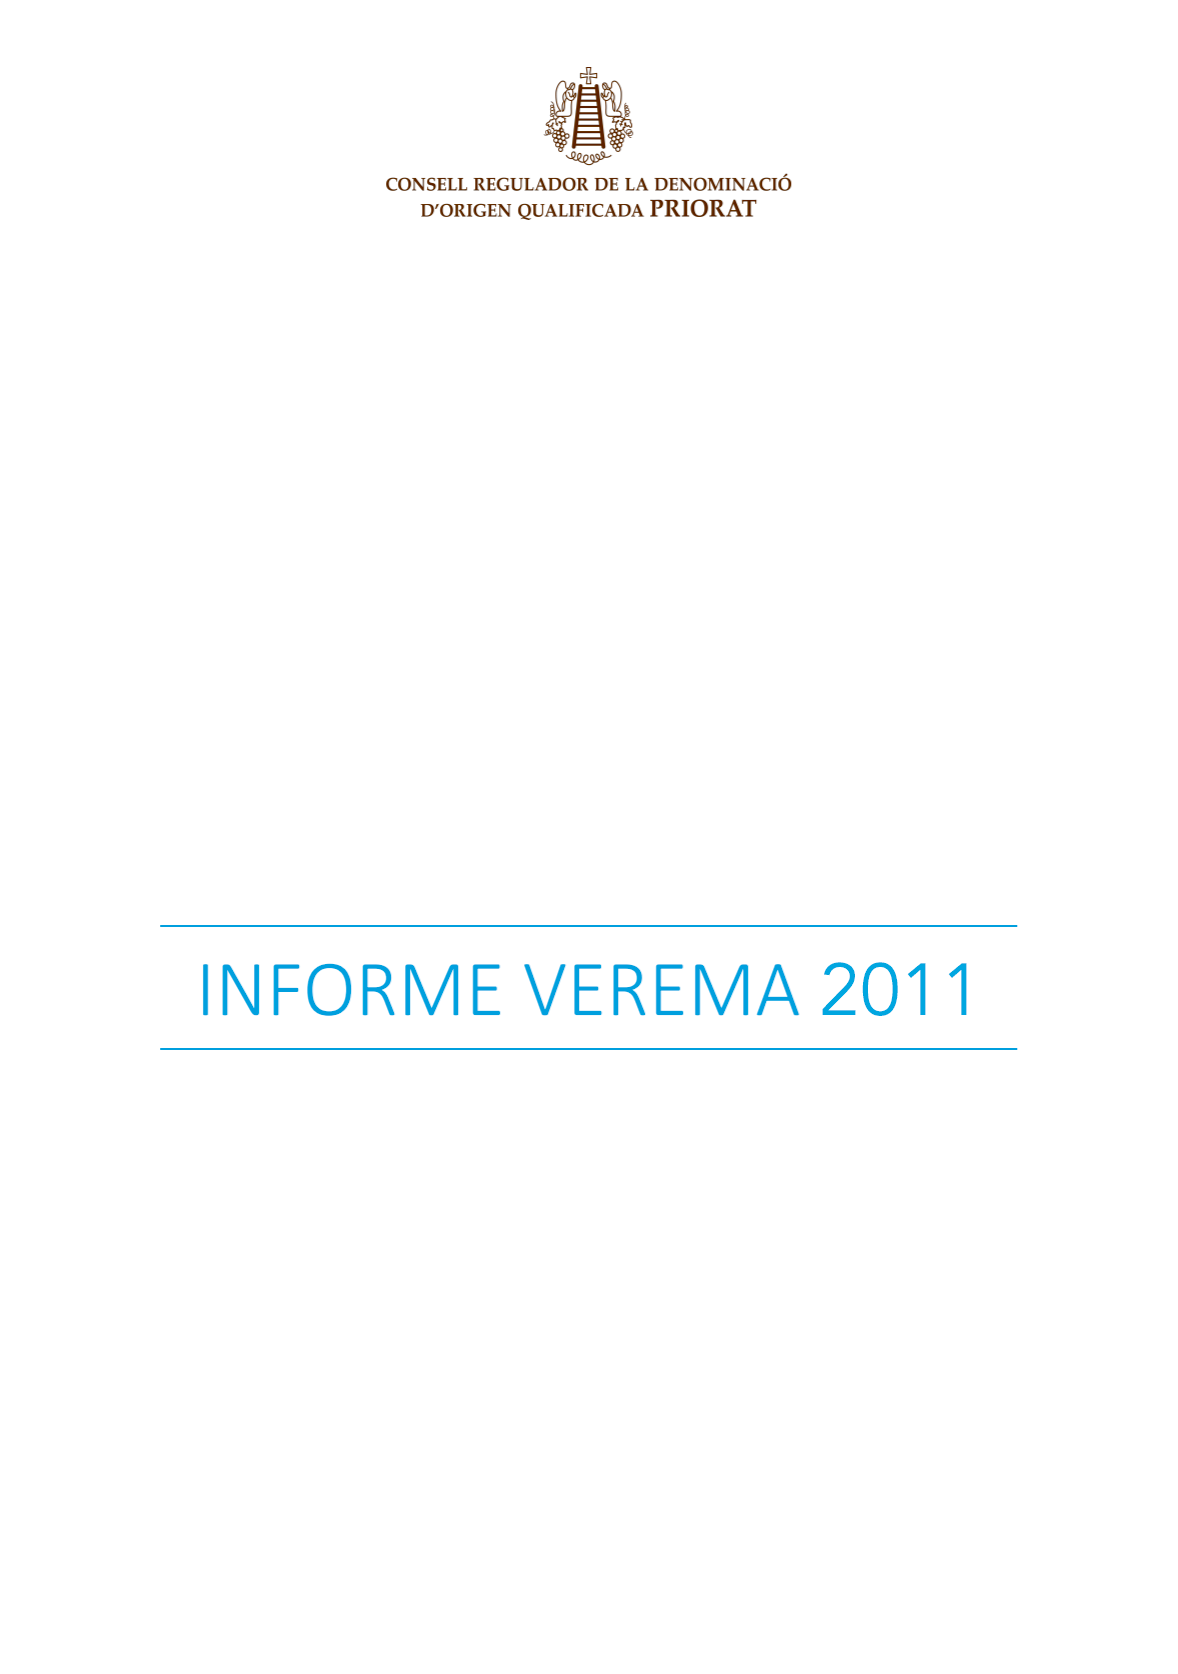 Informe de verema 2011